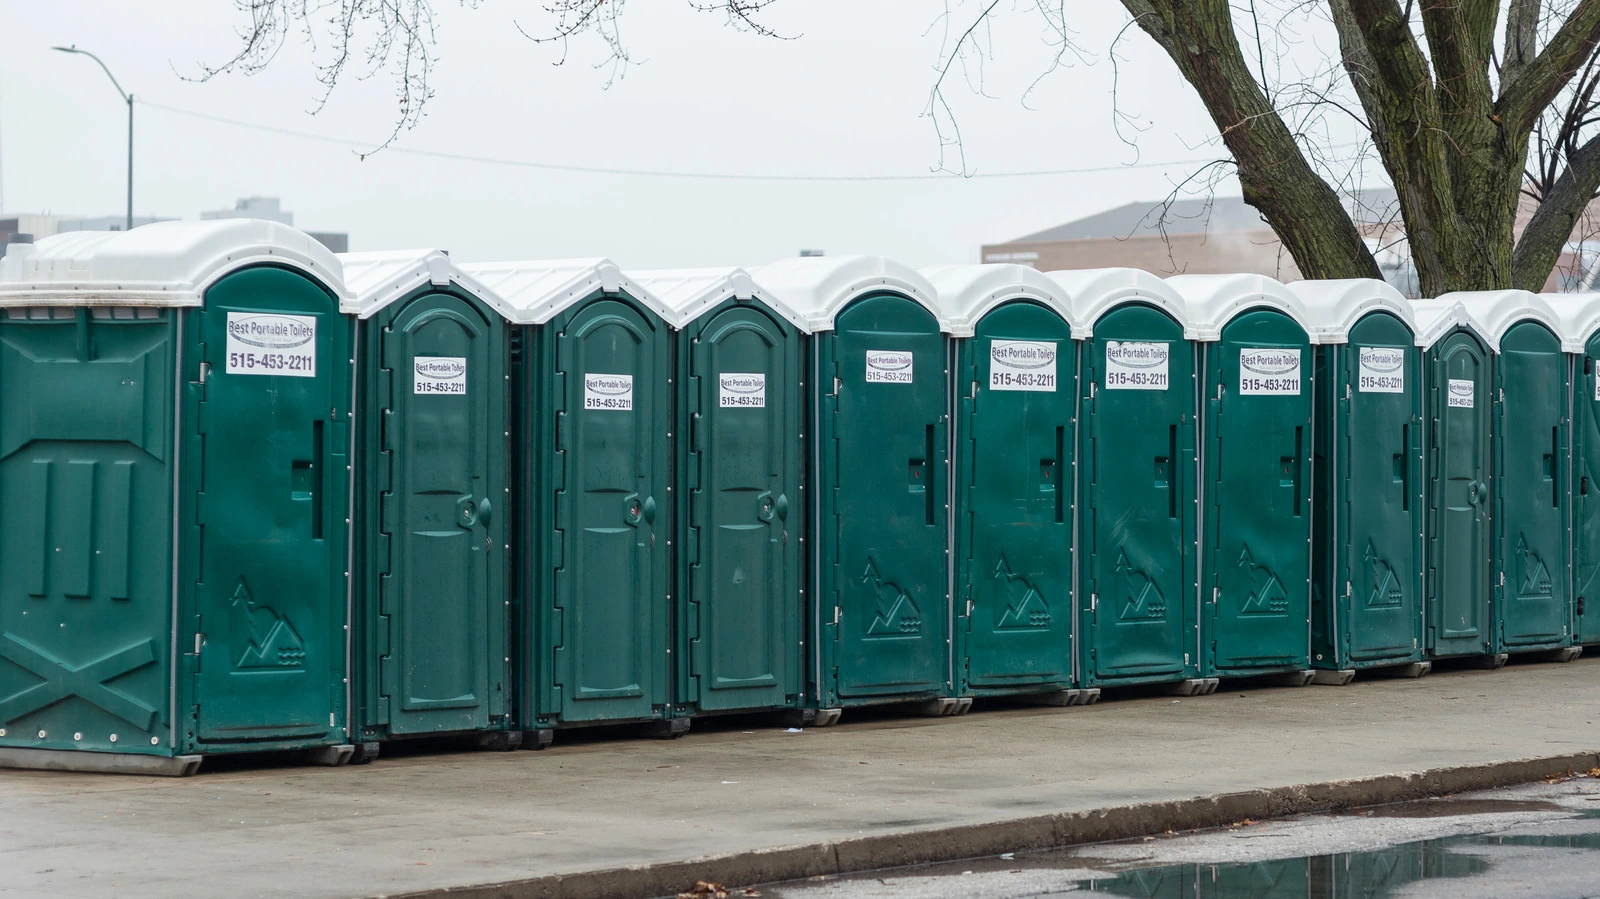 Long row of green portable toilet units - History of the Porta Potty - ServiceCore Blog